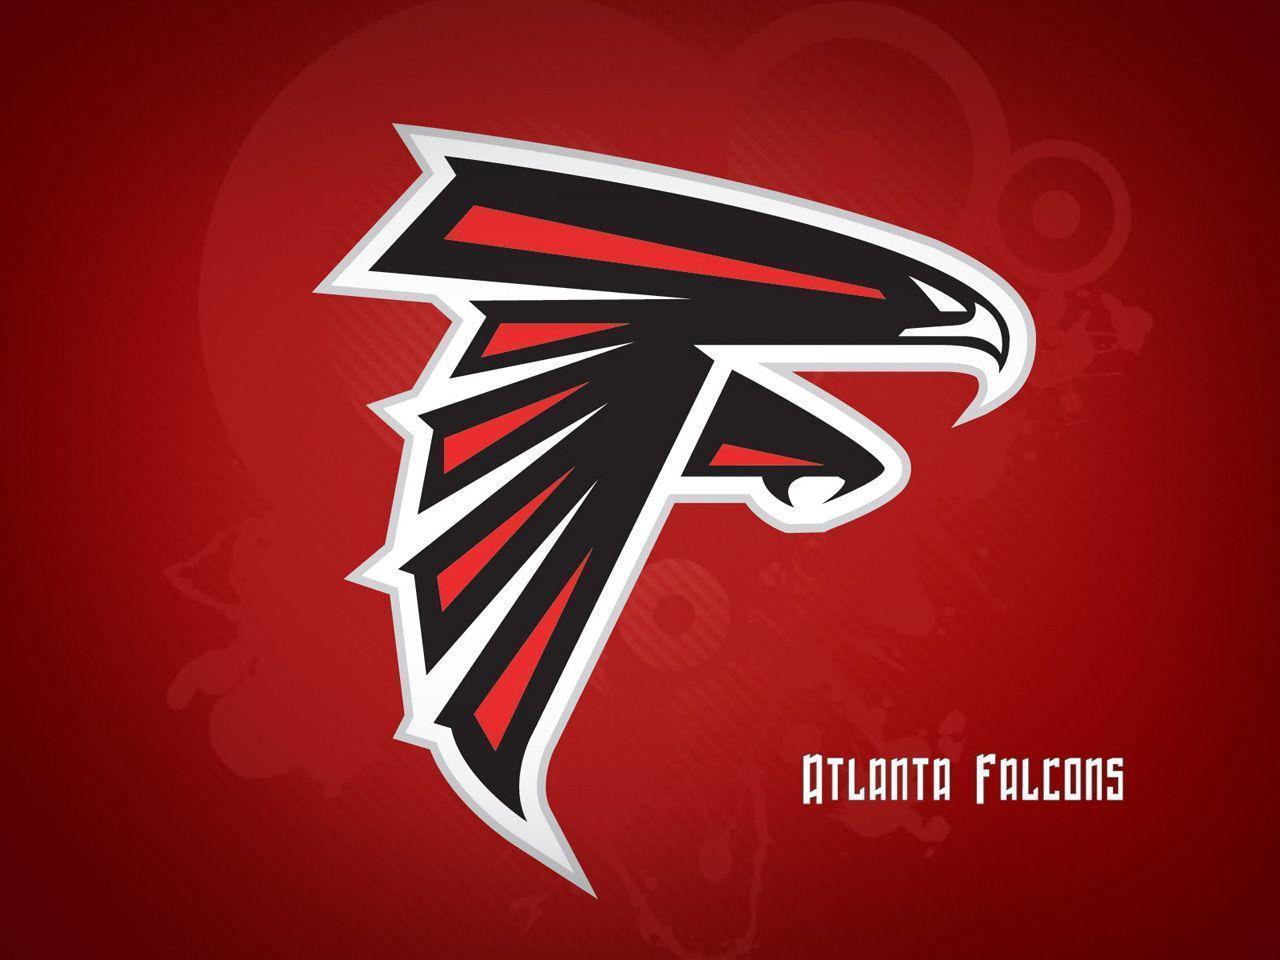 Atlanta Falcons HD Image For Desktop Download. Sport HD Wallpaper